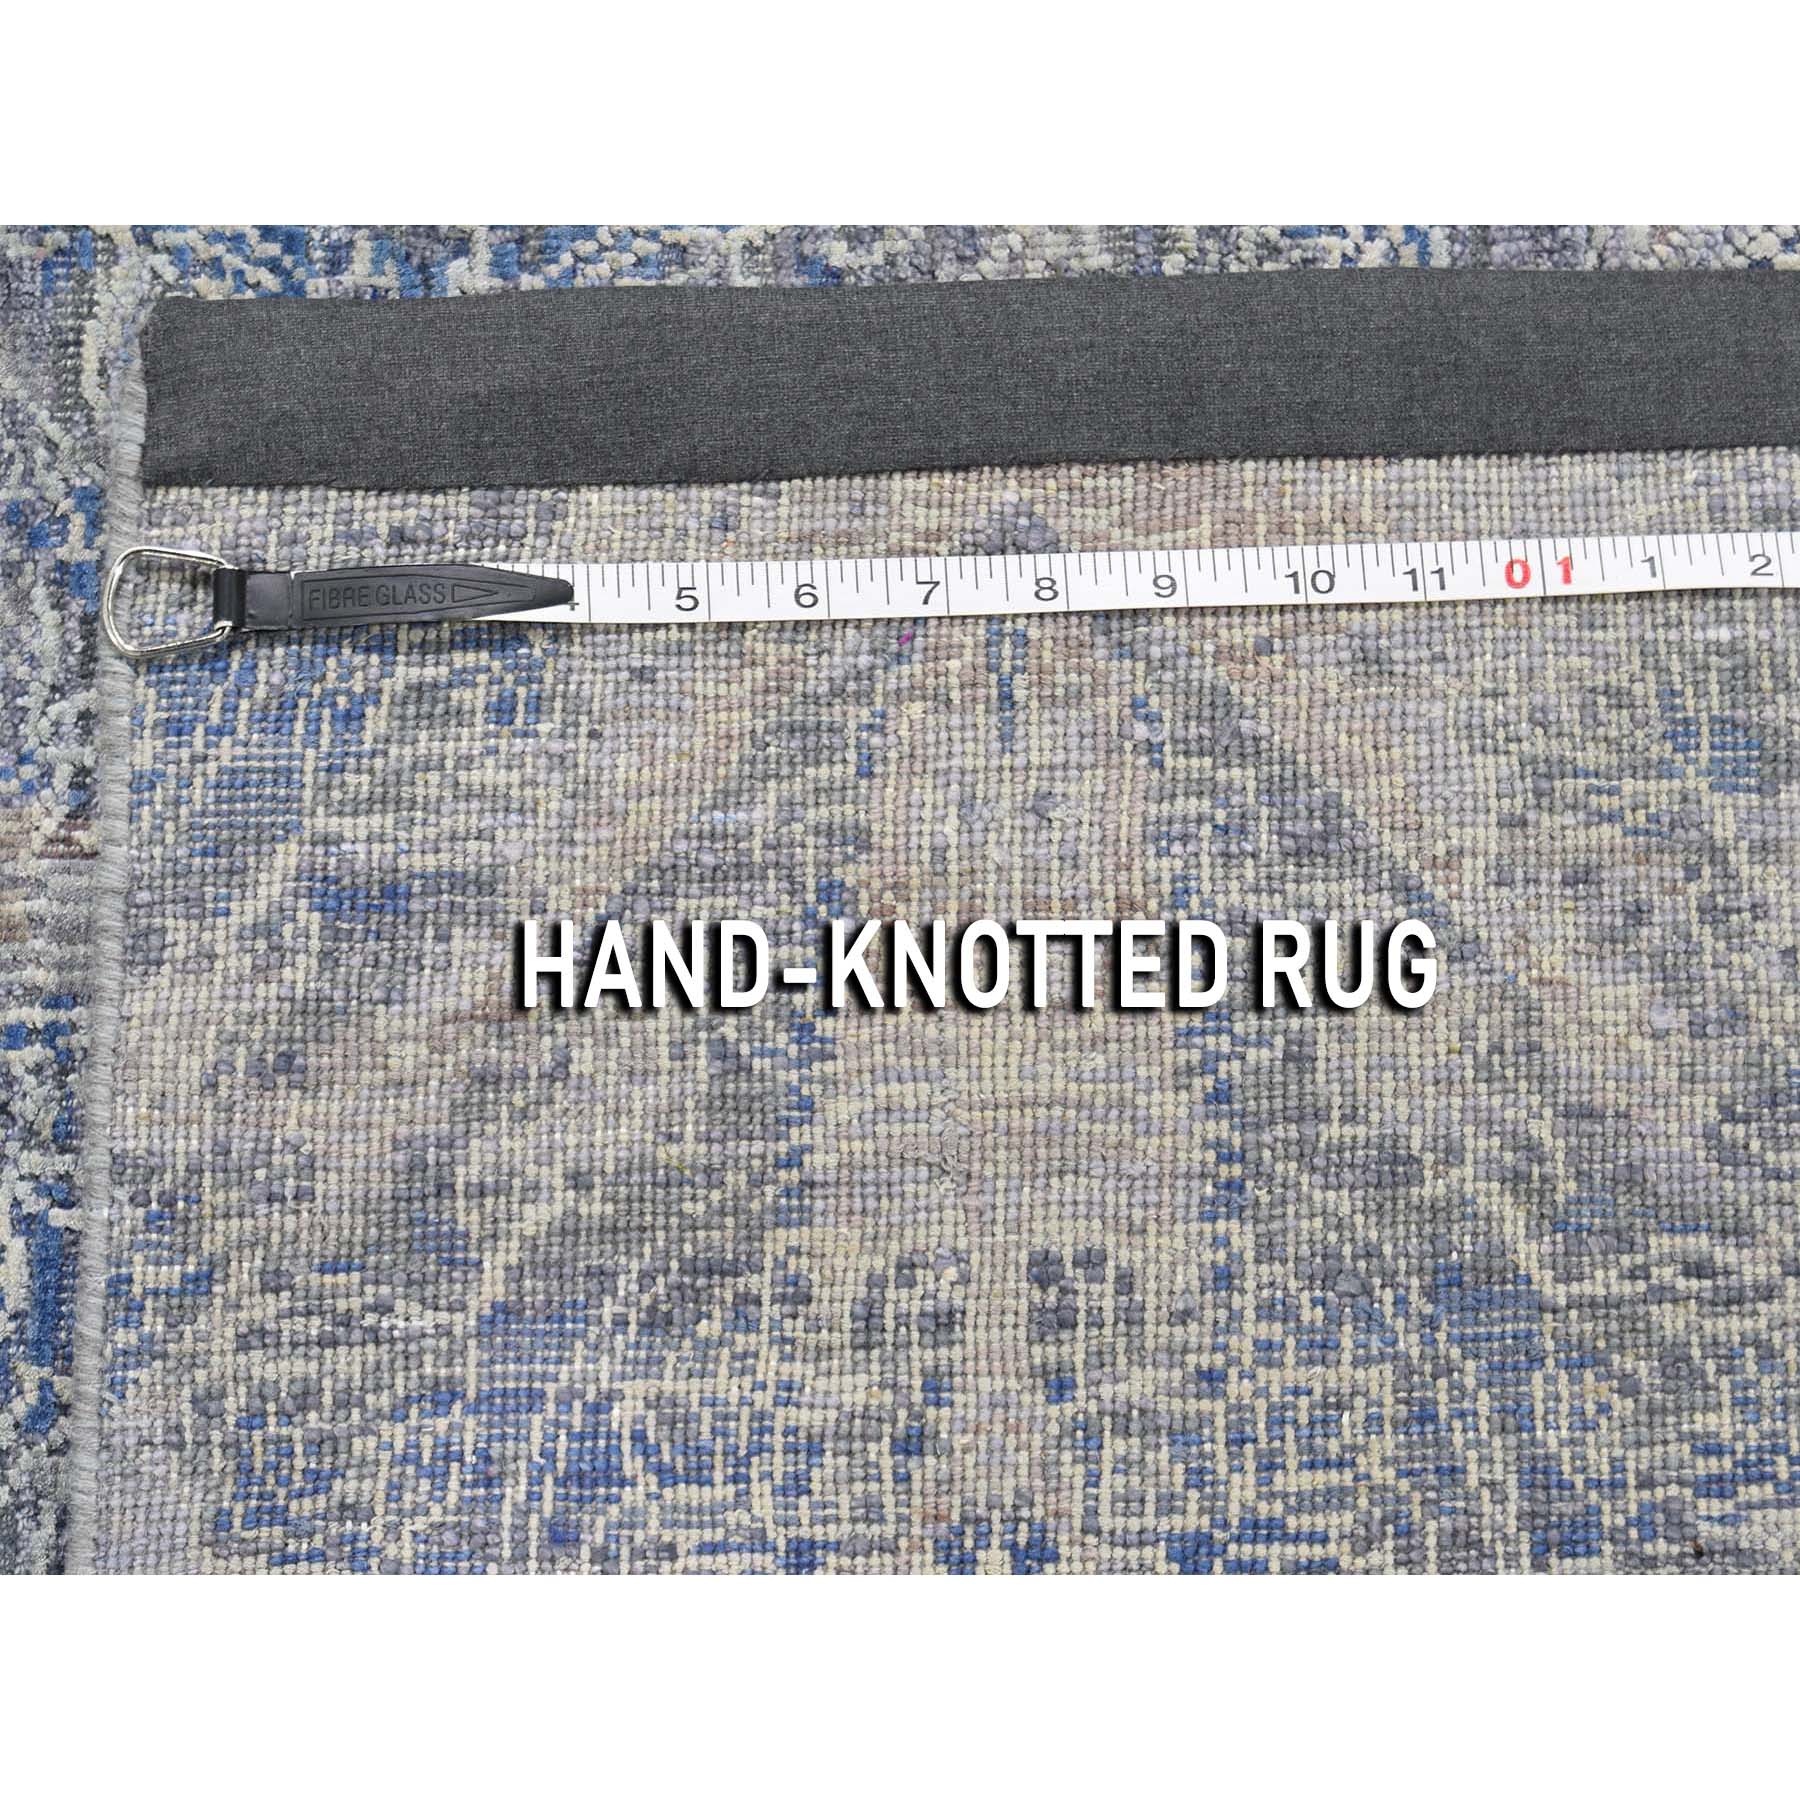 4-9 x7- ERASED ROSSETS,Silk With Textured Wool Denim BluE Hand-Knotted Oriental Rug 